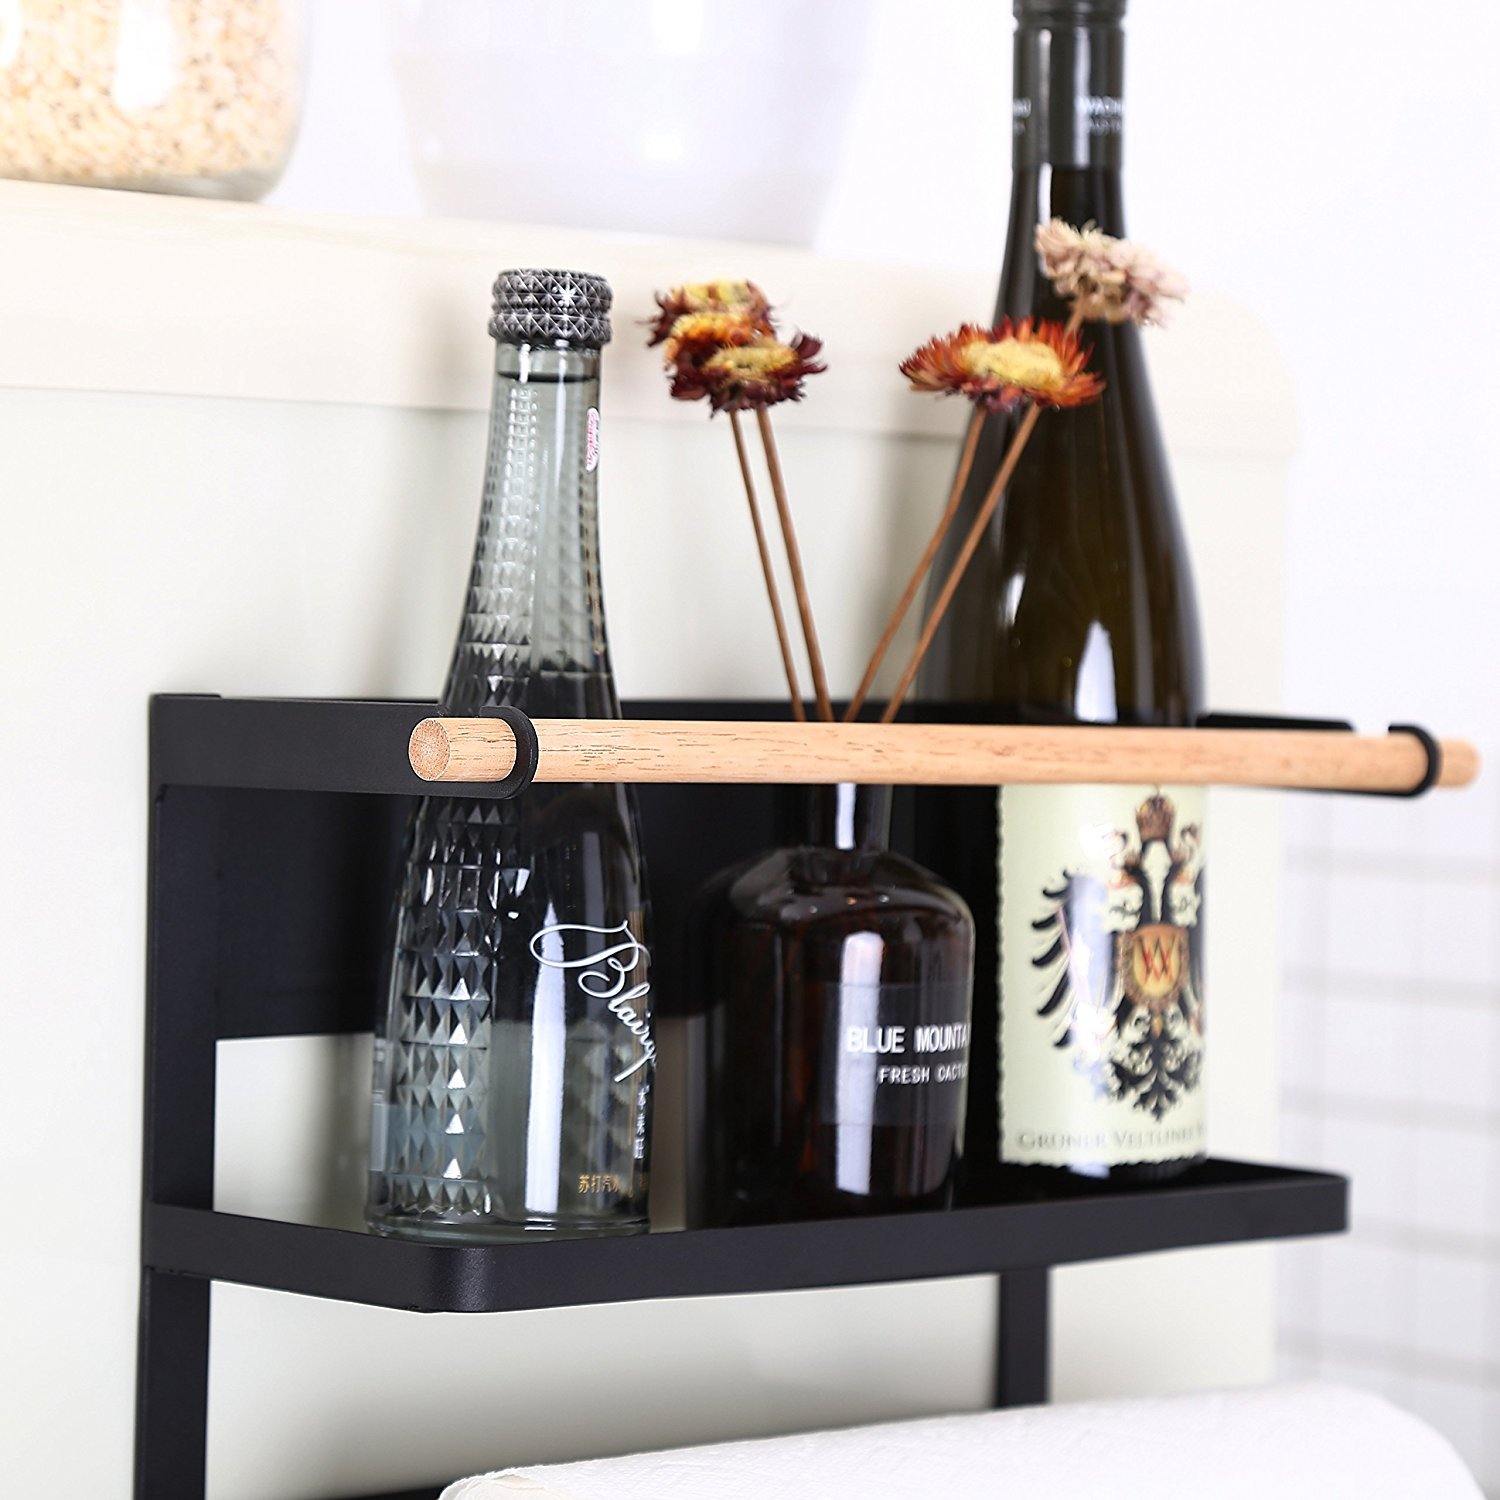 Wall-mounted magnetic kitchen side shelf